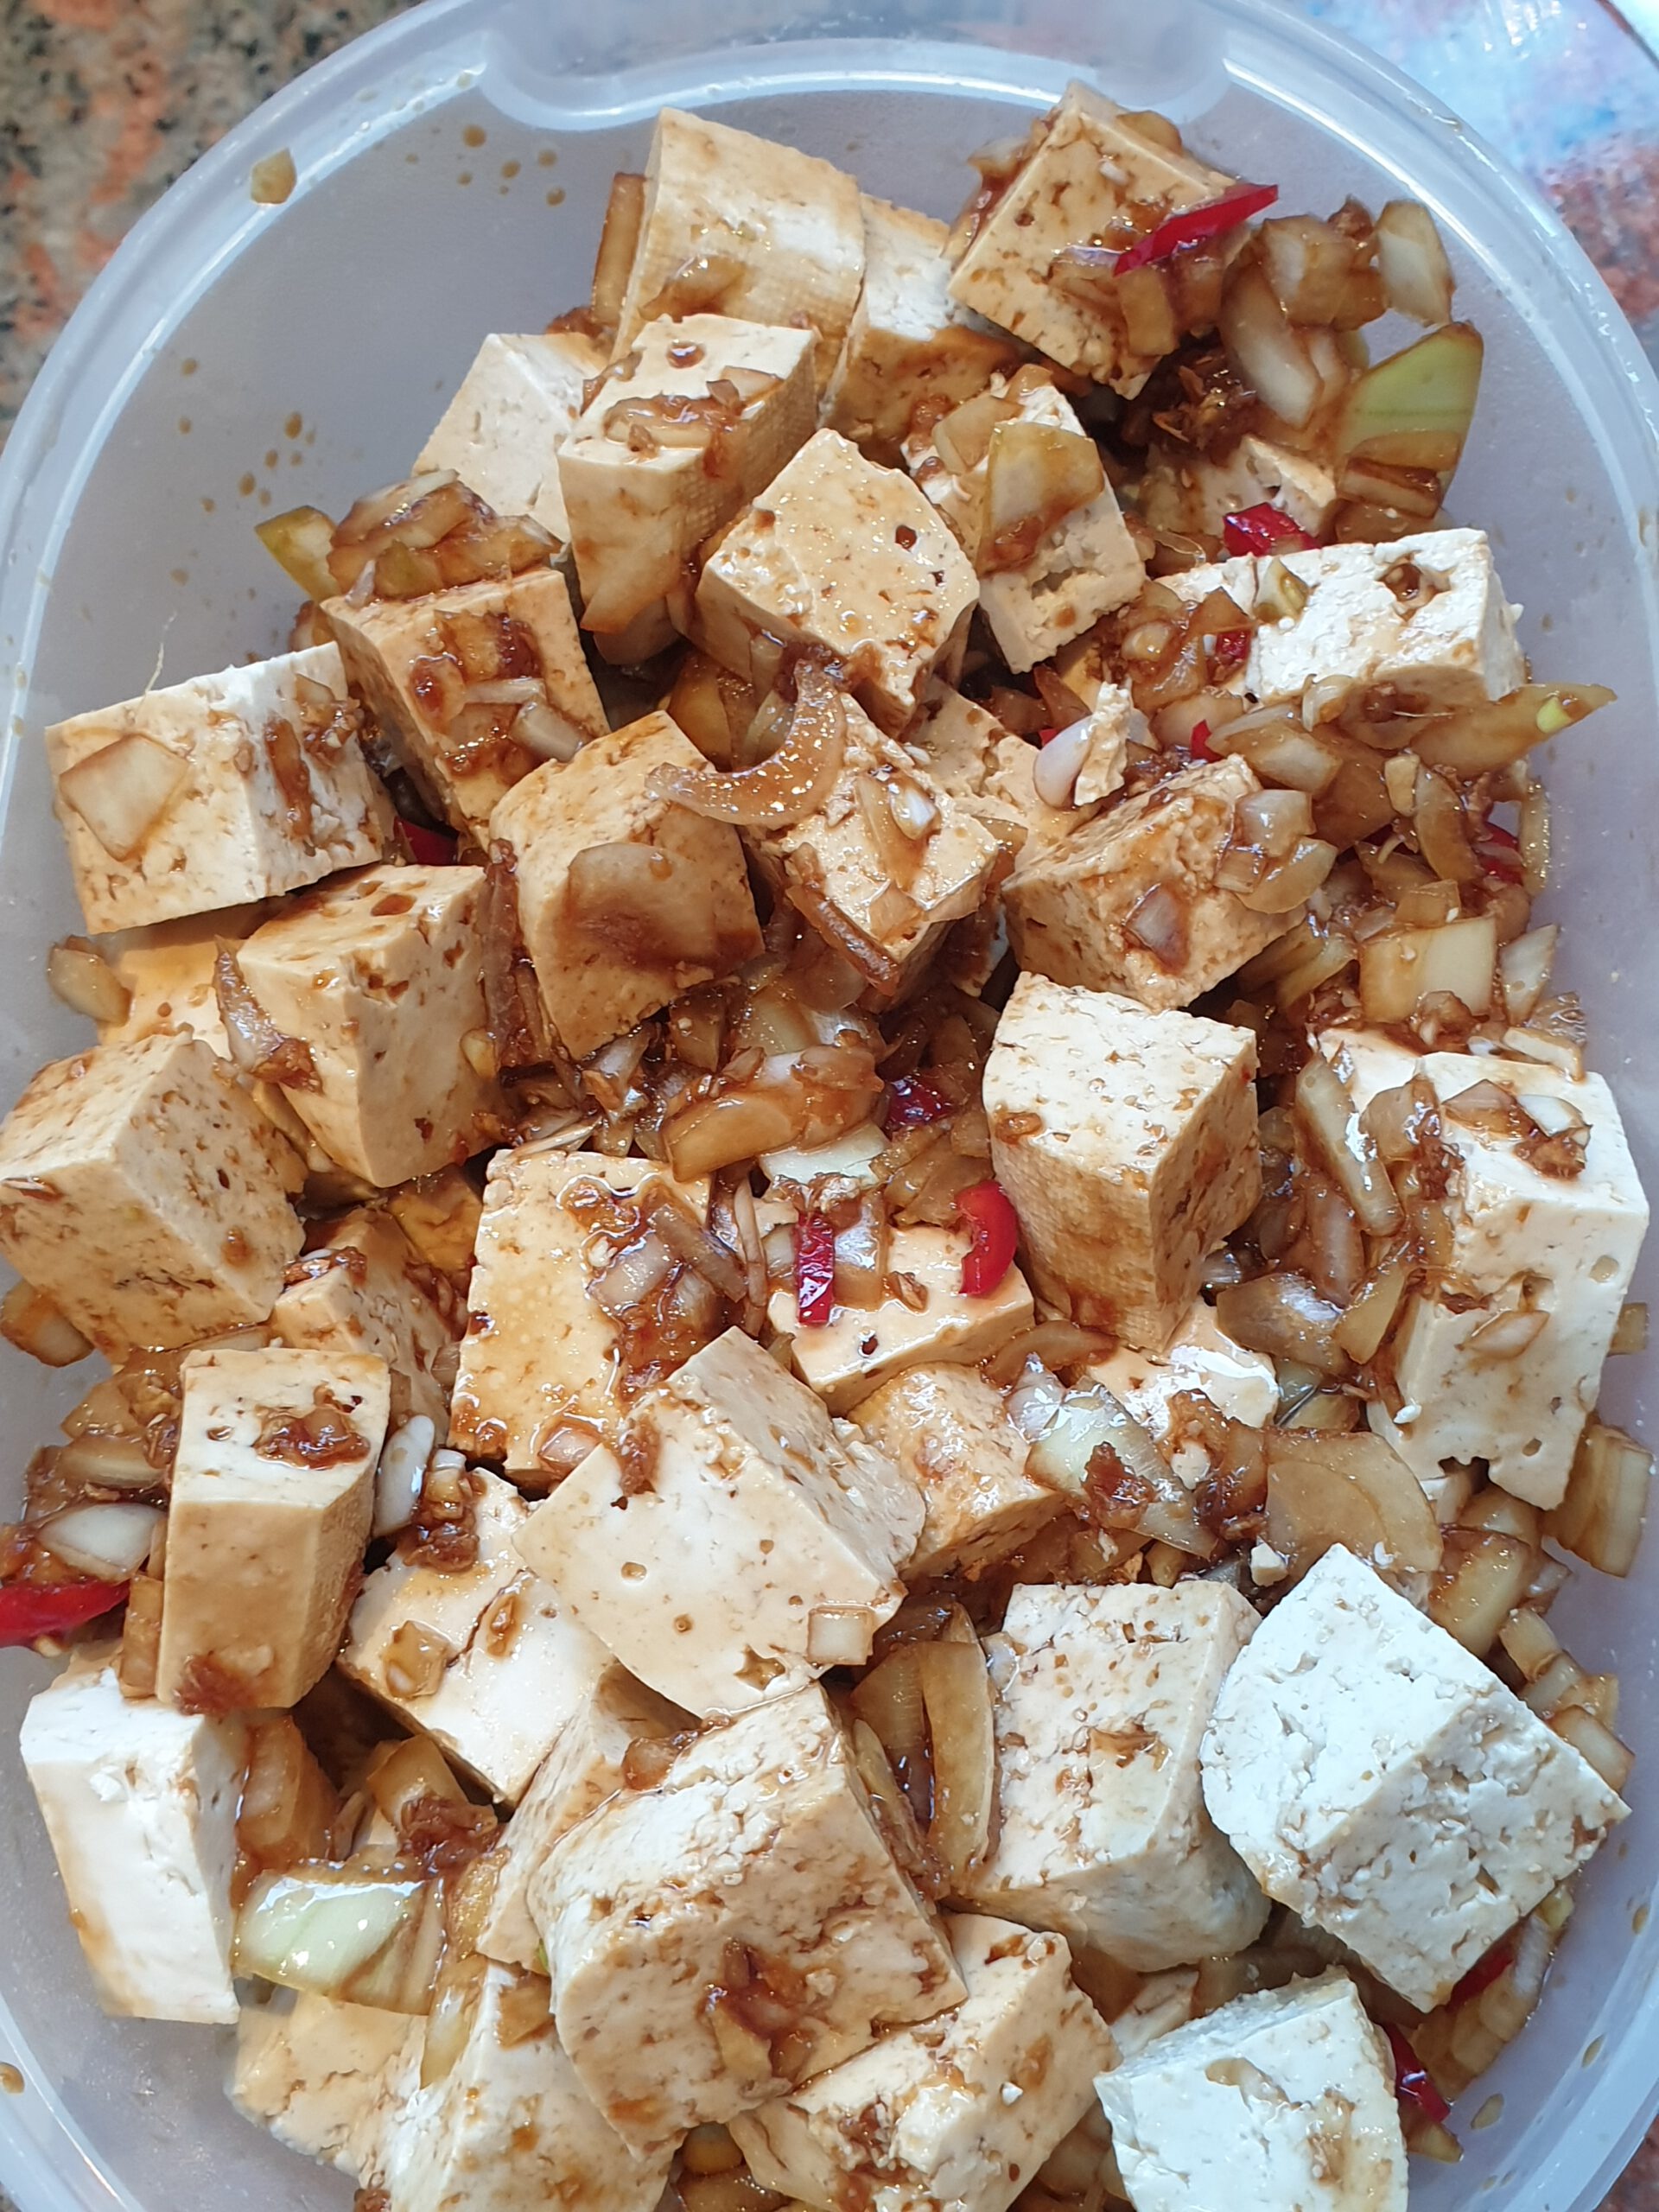 Tofu in marinade sauce